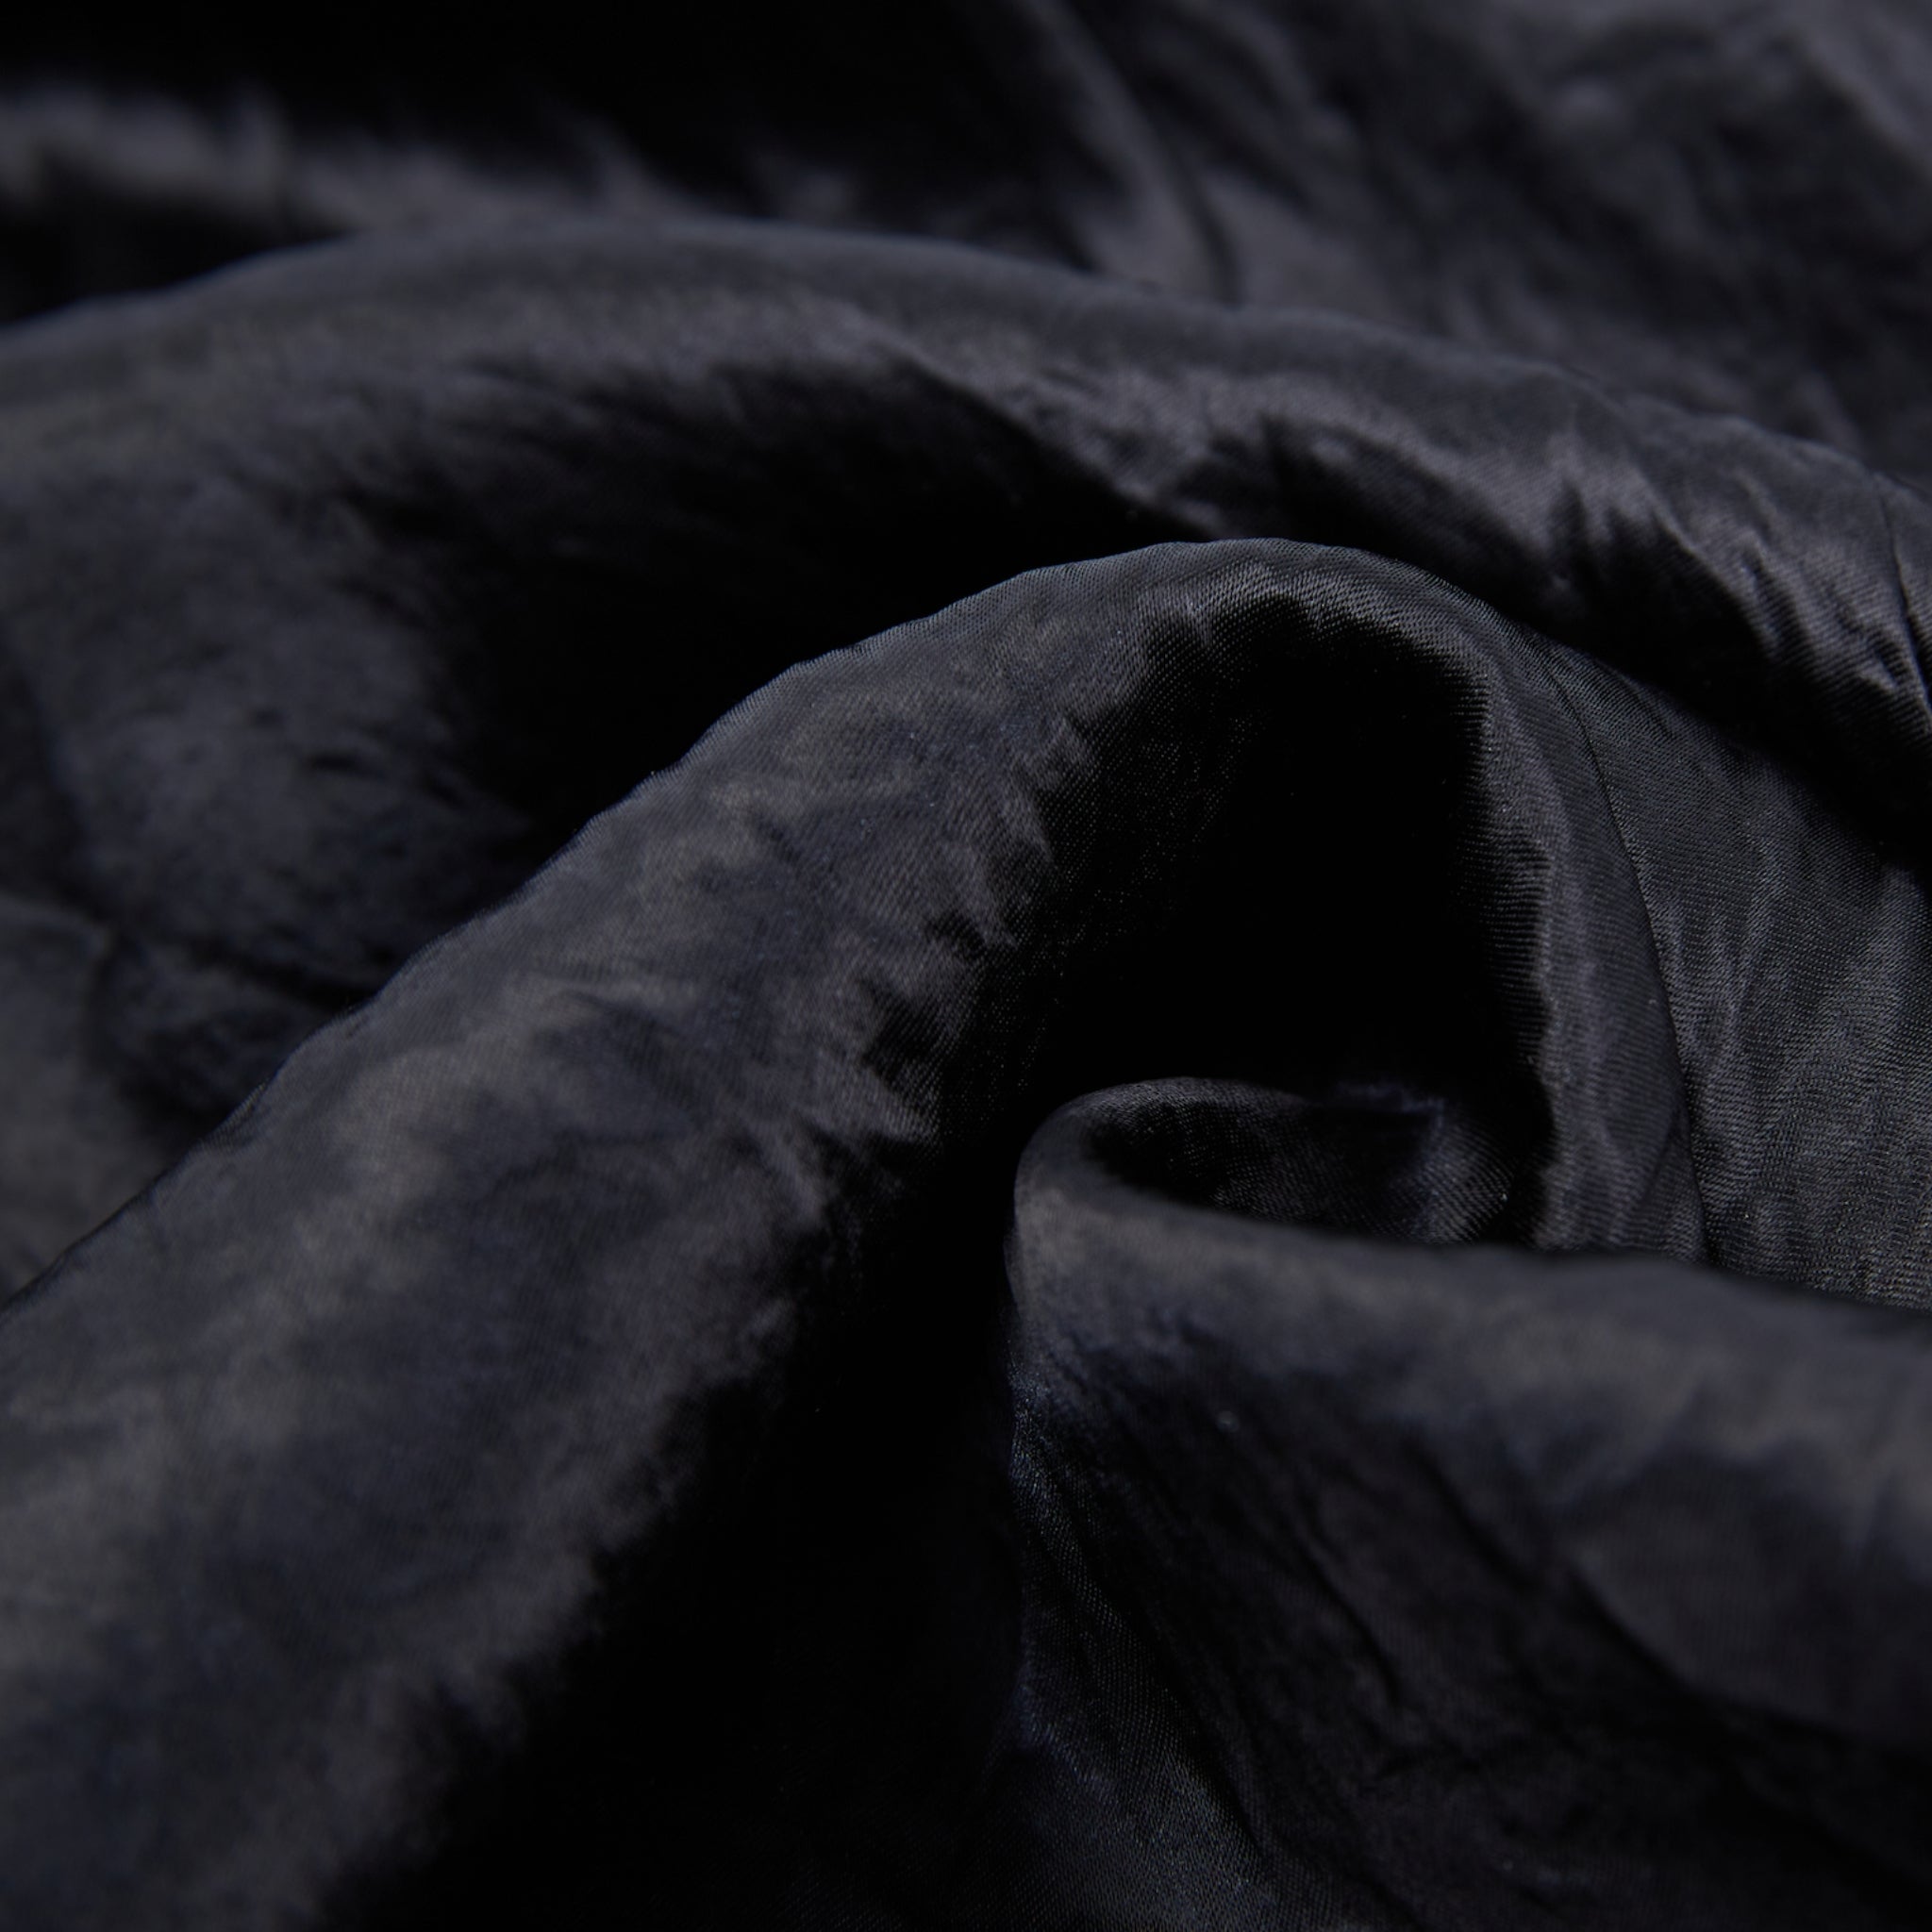 closeup of black slip dress fabric texture